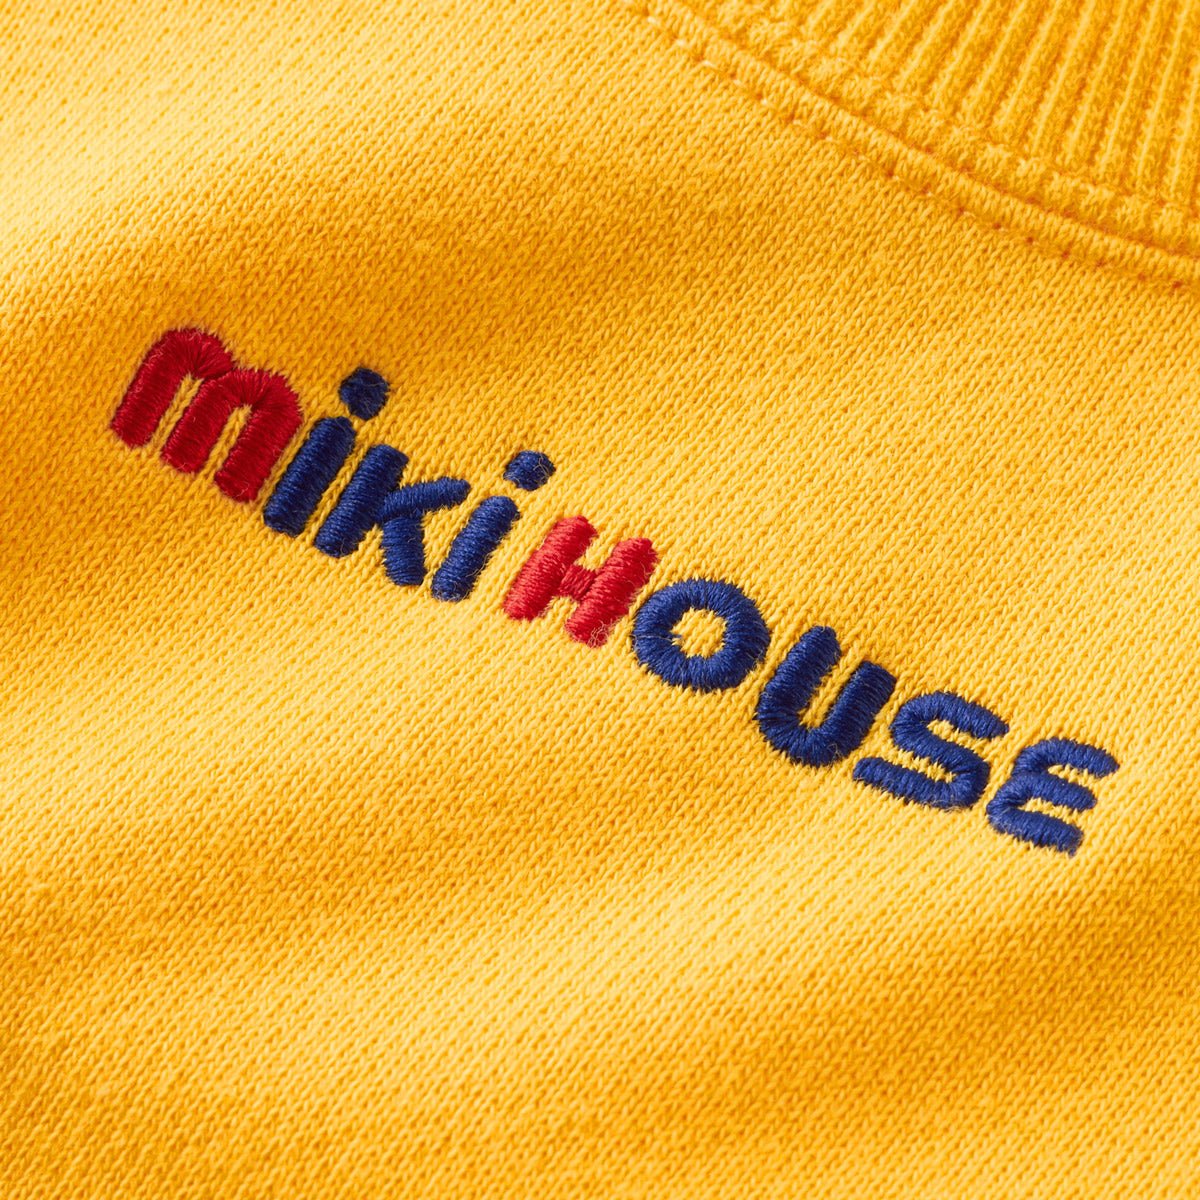 MIKI HOUSE Embroidered Logo Sweatshirt Classic - 10-5605-386-04-80